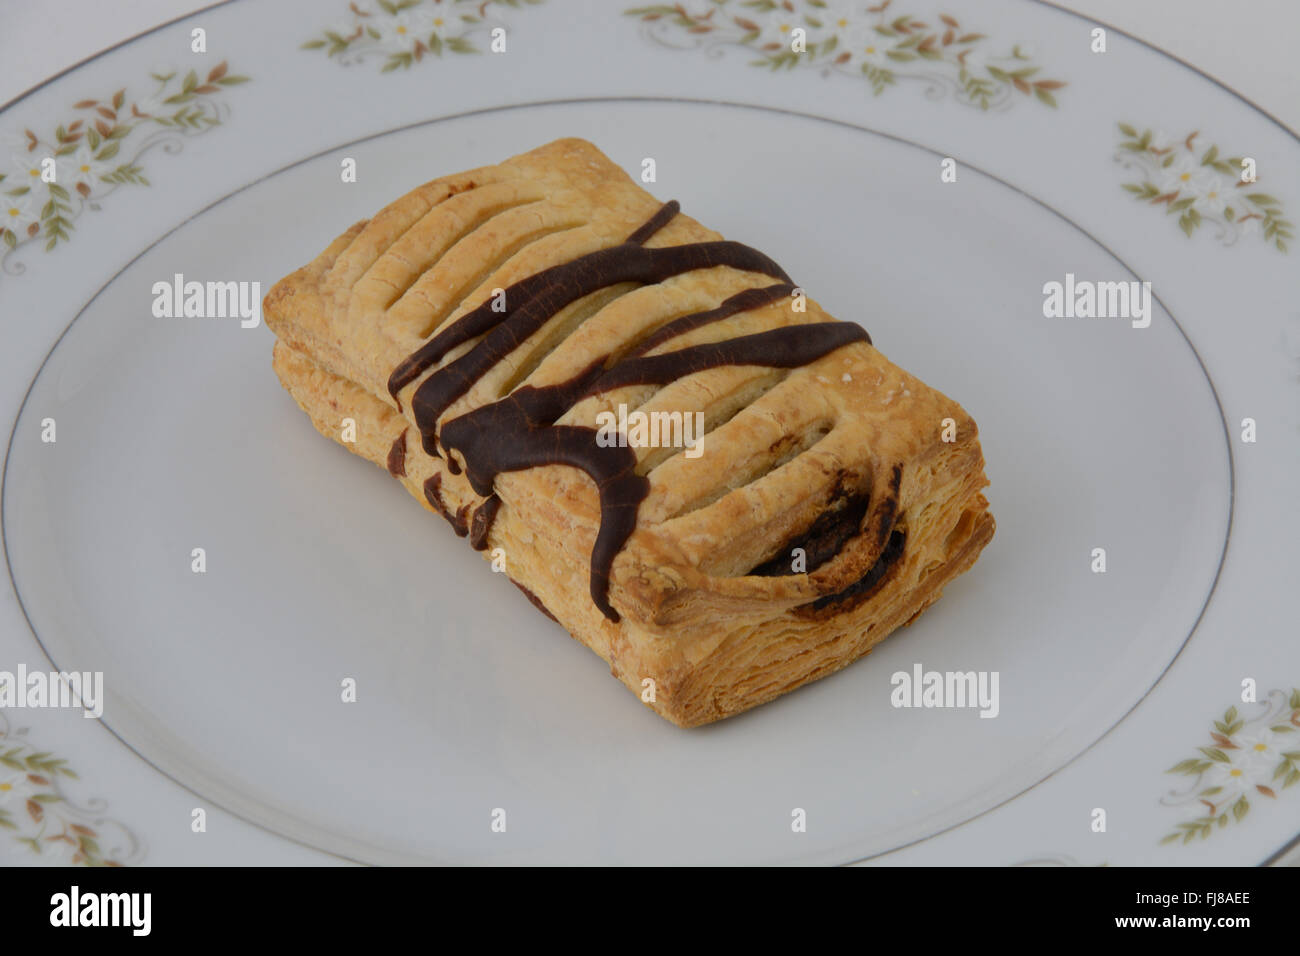 Chocolate jalousie pastry on plate Stock Photo